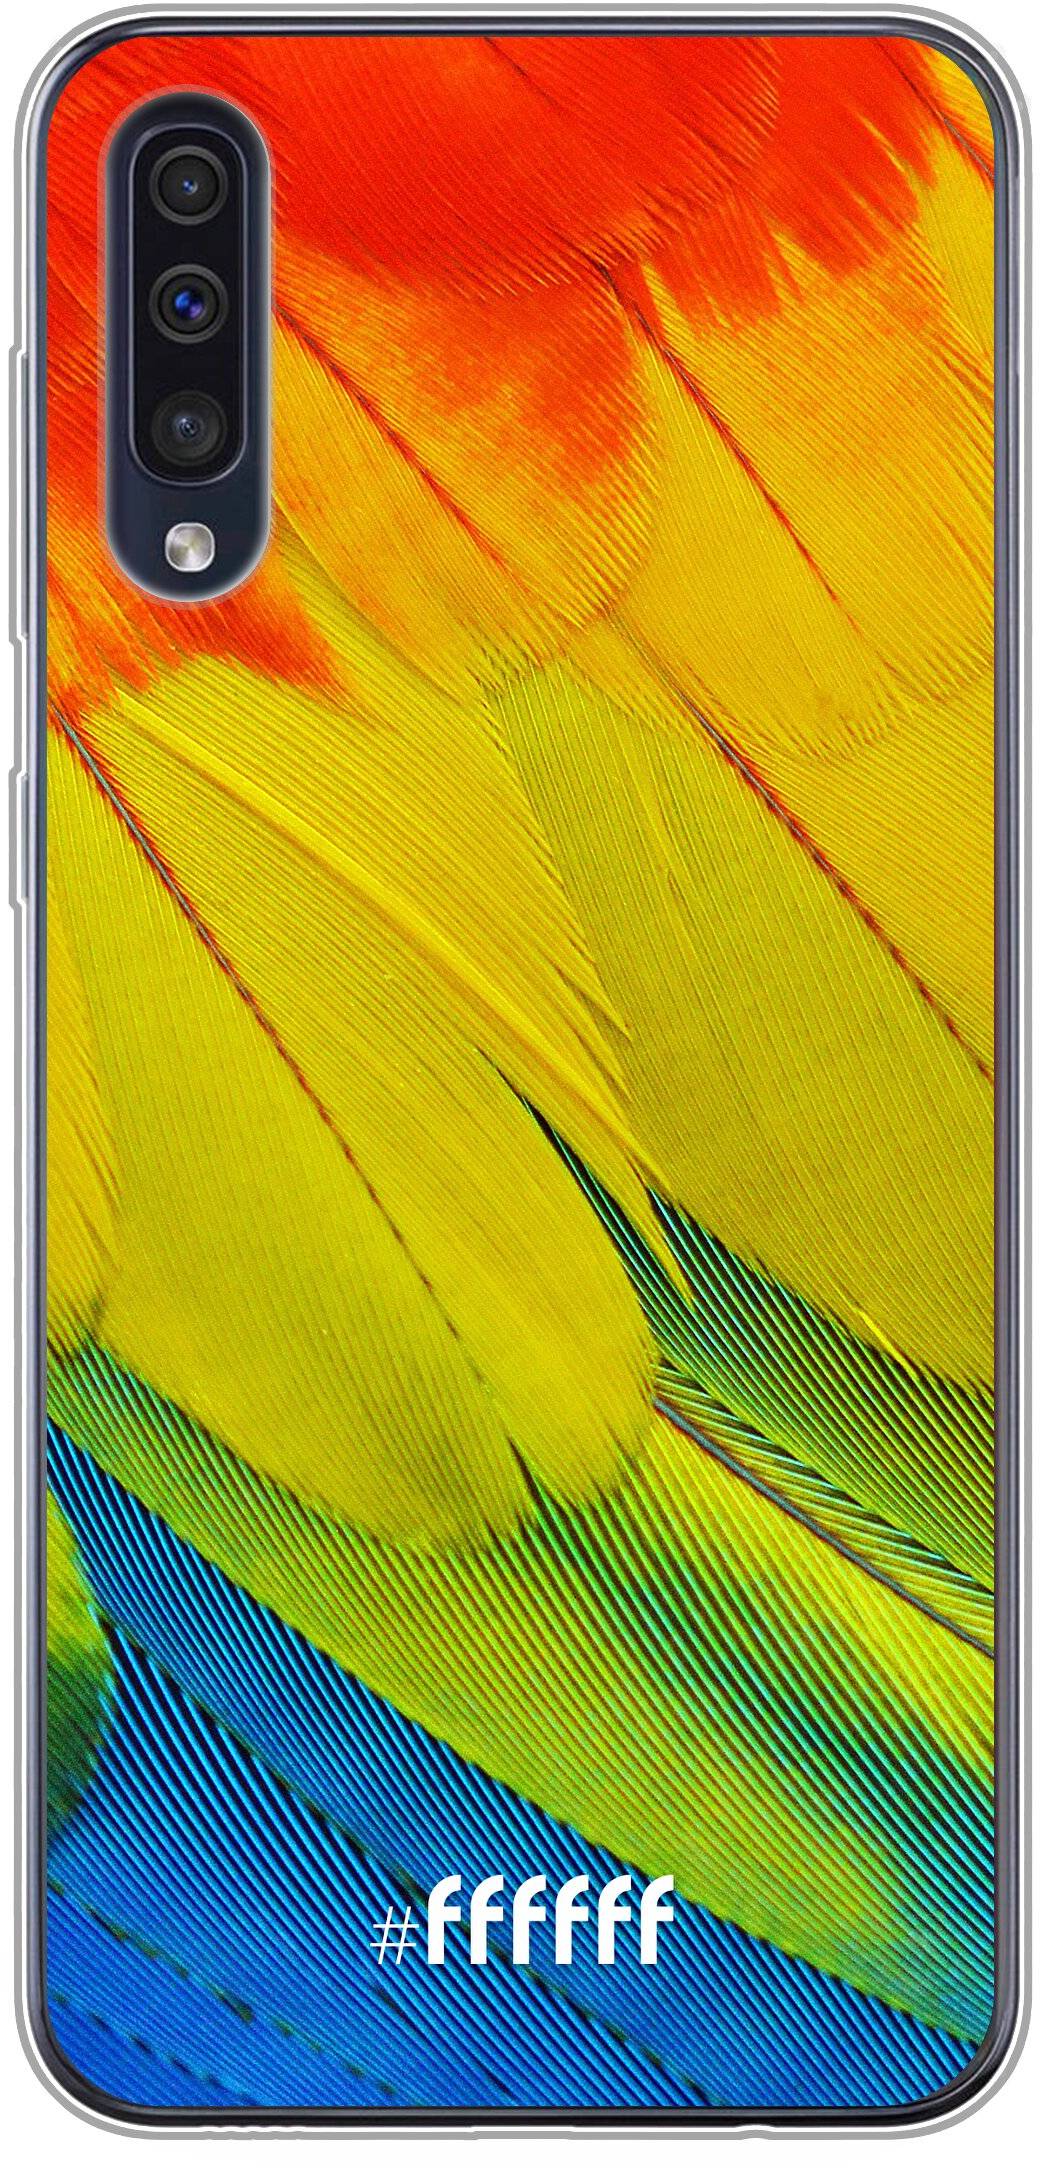 Macaw Hues Galaxy A40